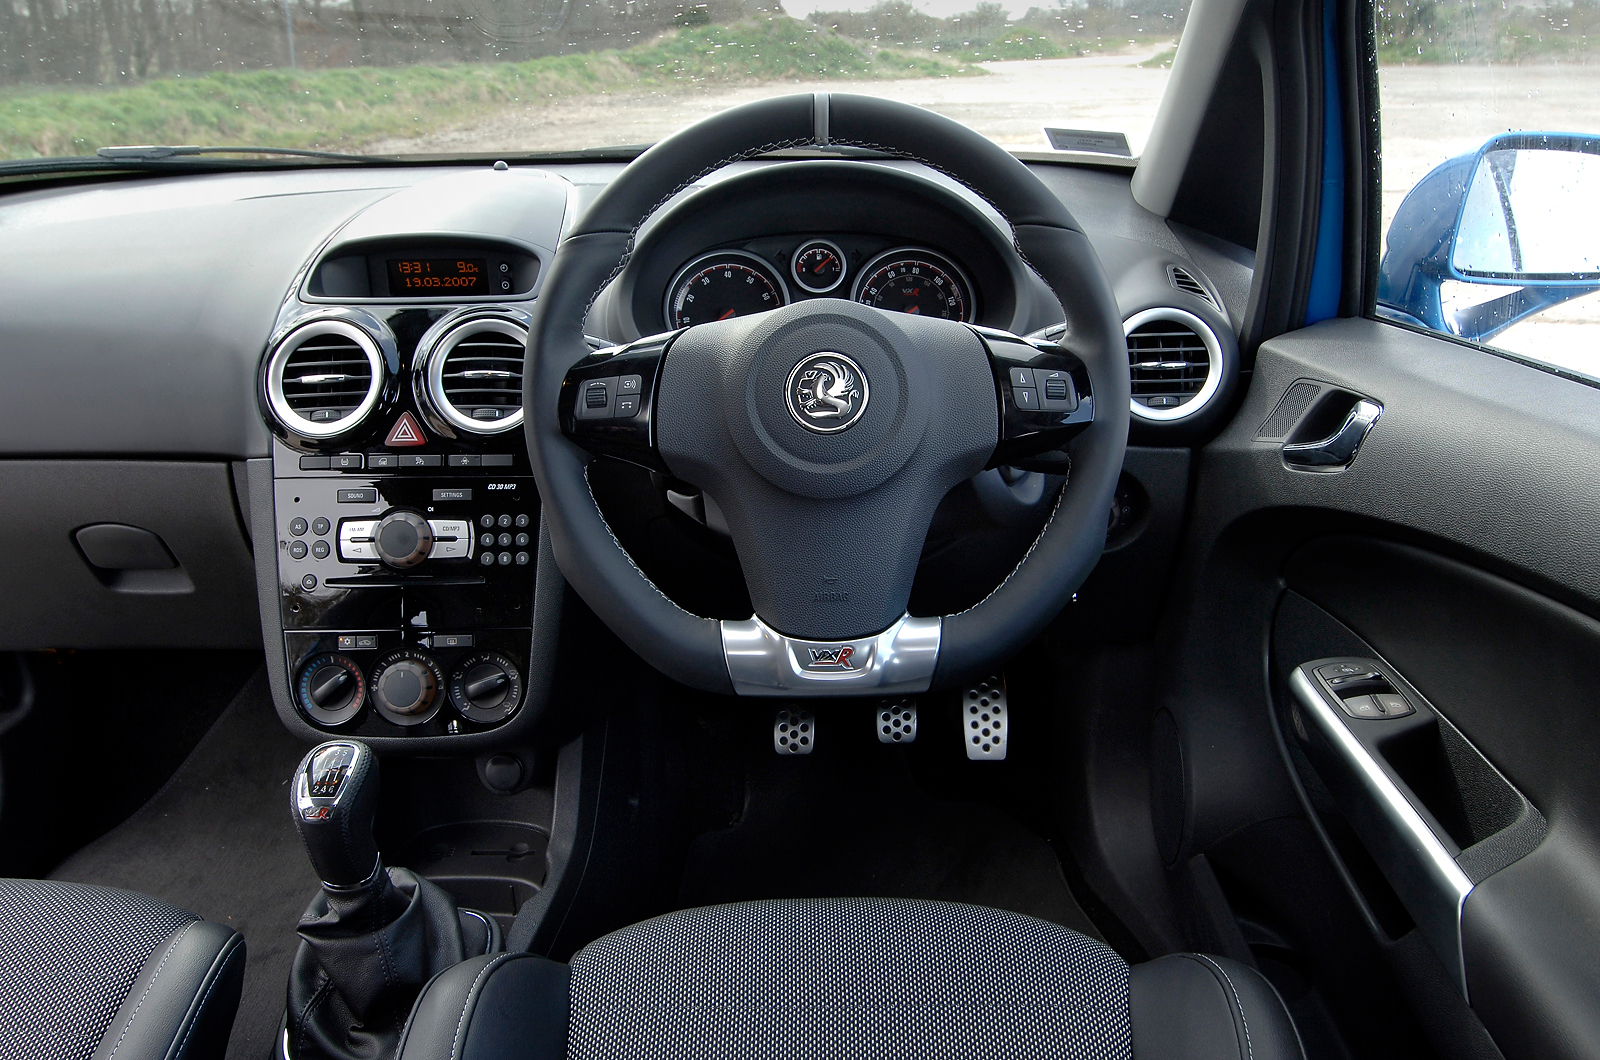 Vauxhall Corsa dashboard